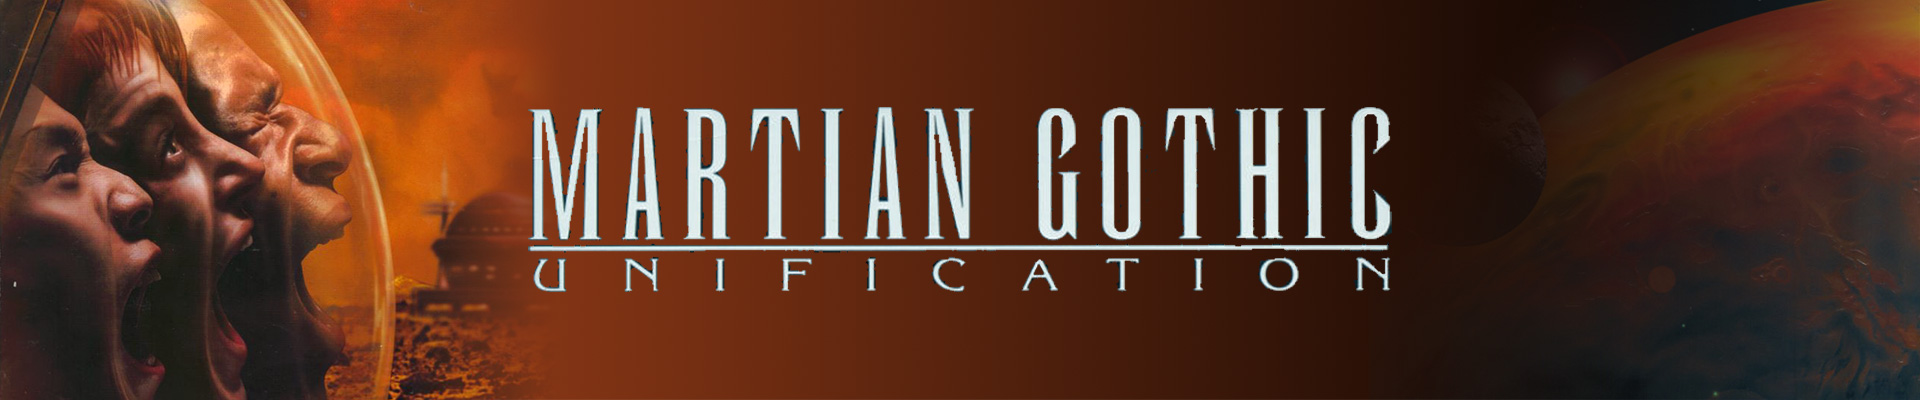 Гадкий Утенок: Martian Gothic: Unification